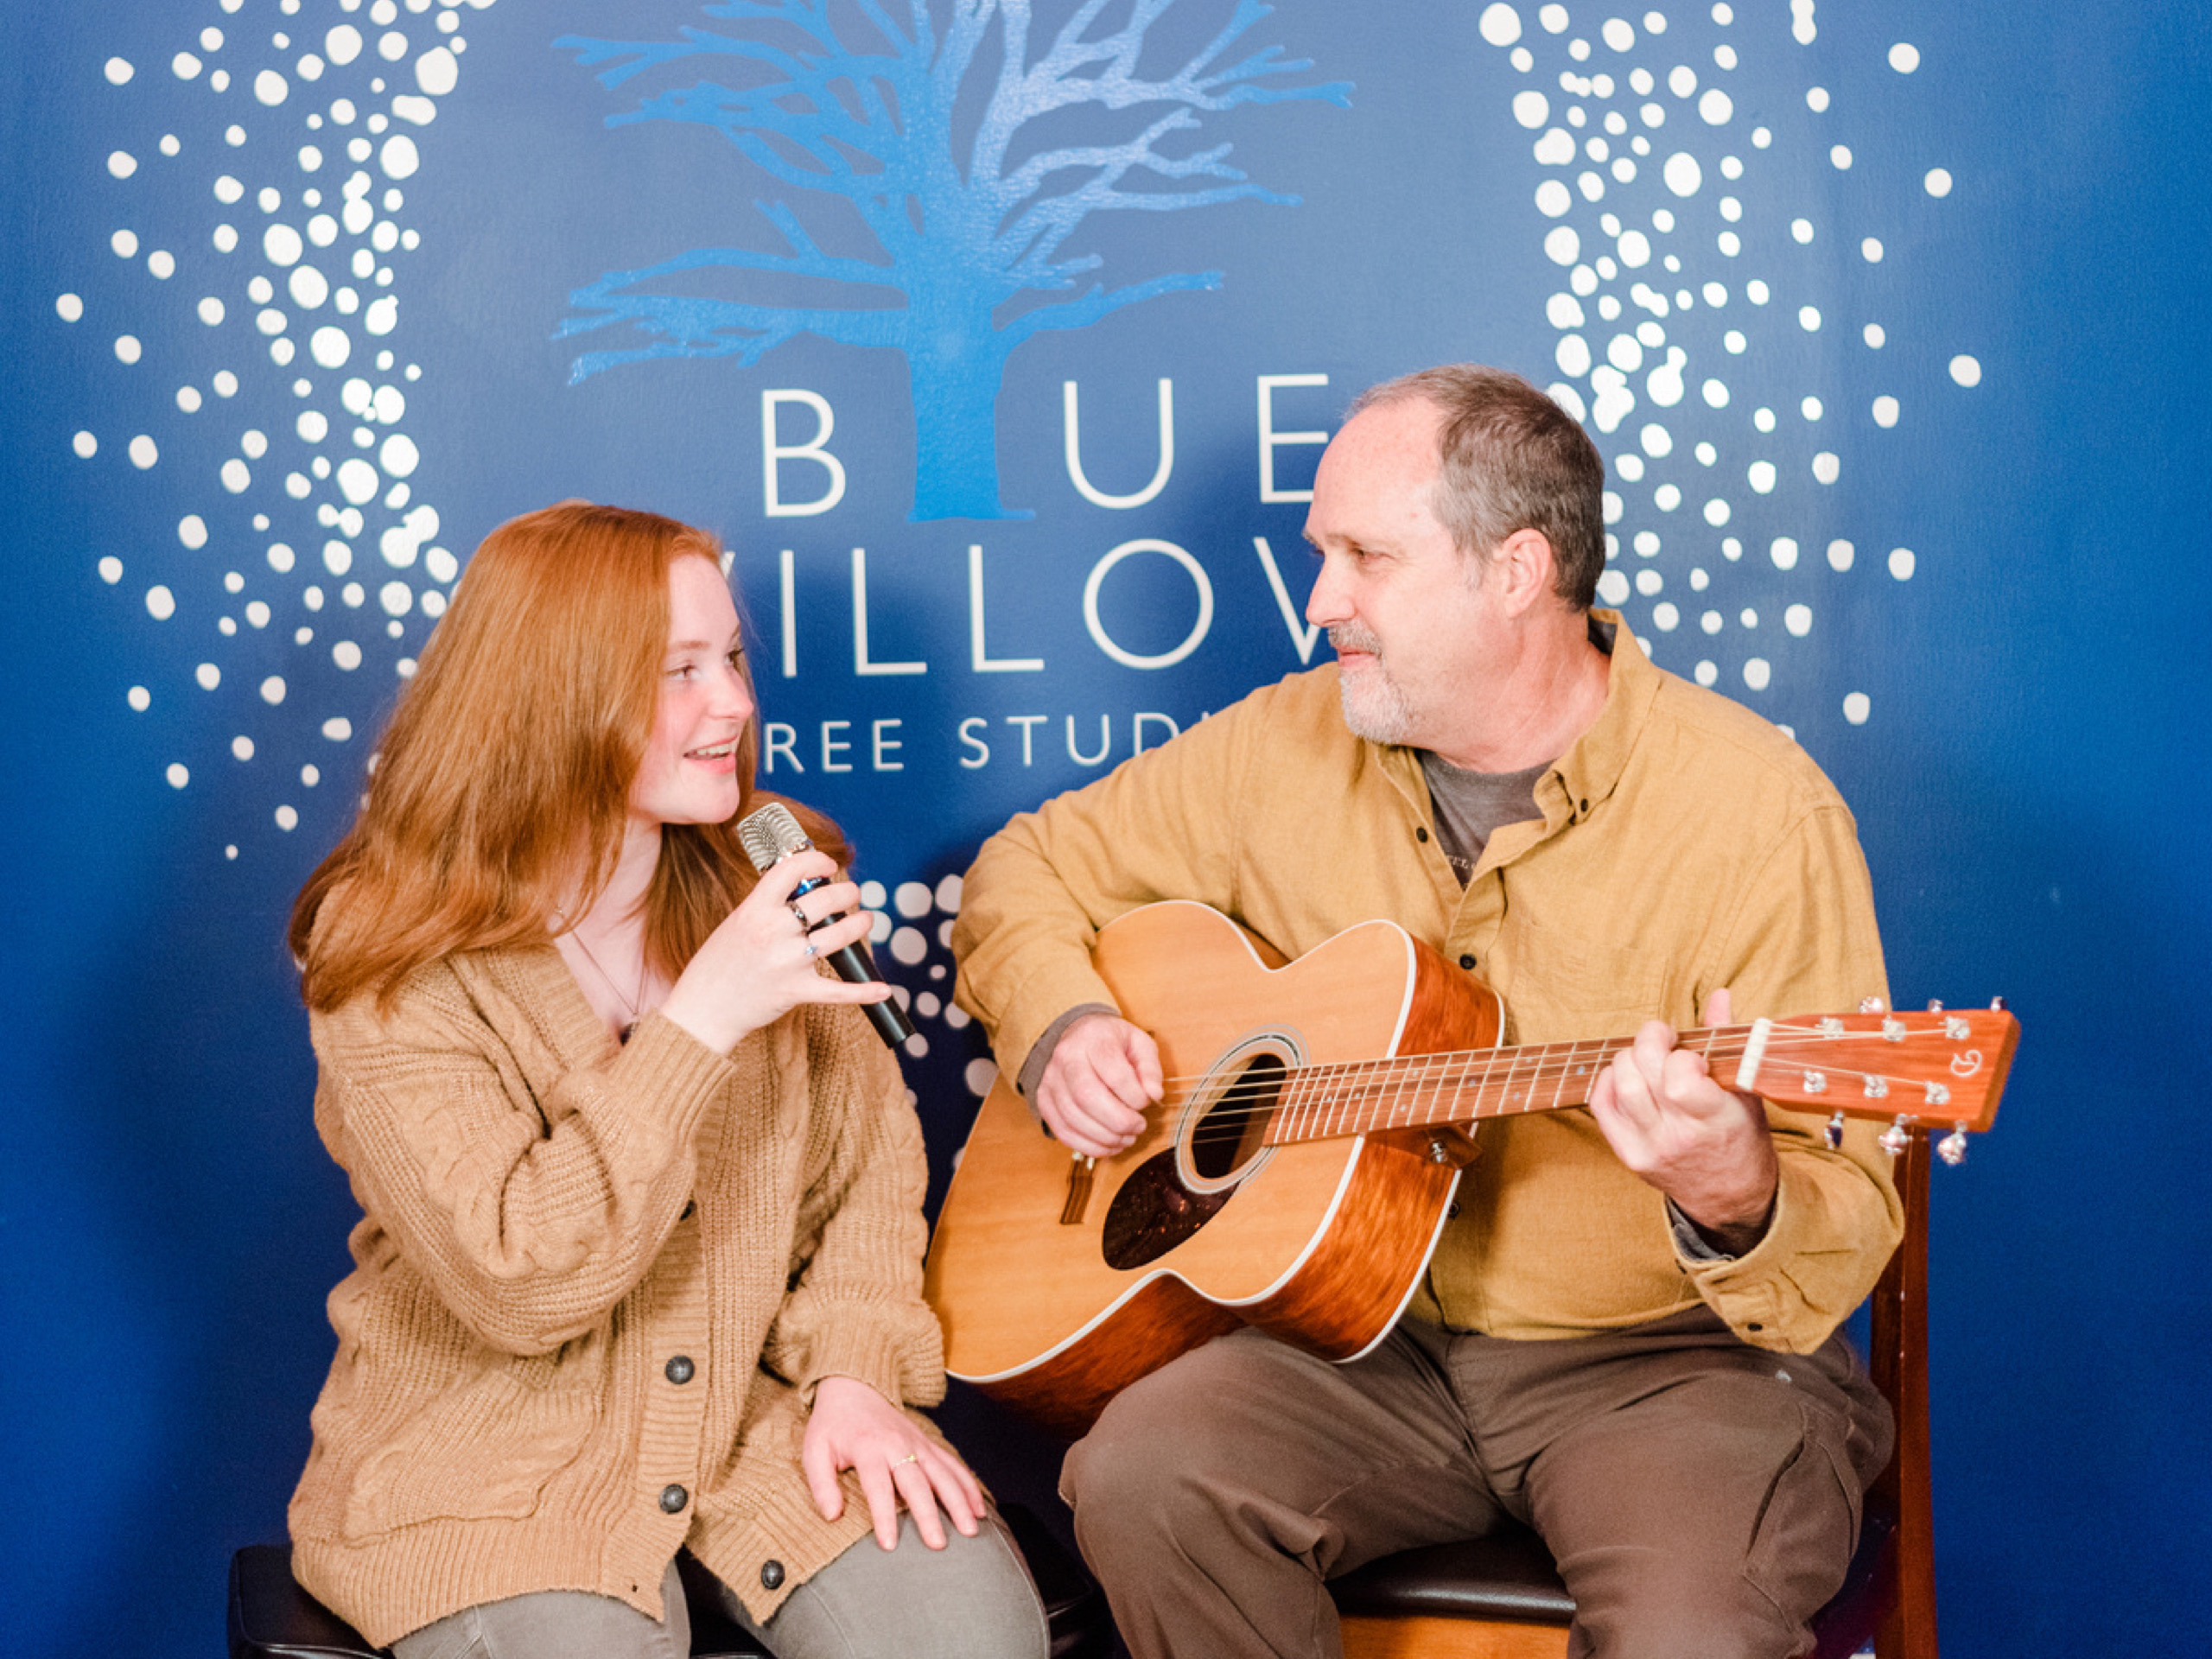 Jonathan & Willow Carter singing in Blue Willow Tree Studio, LLC